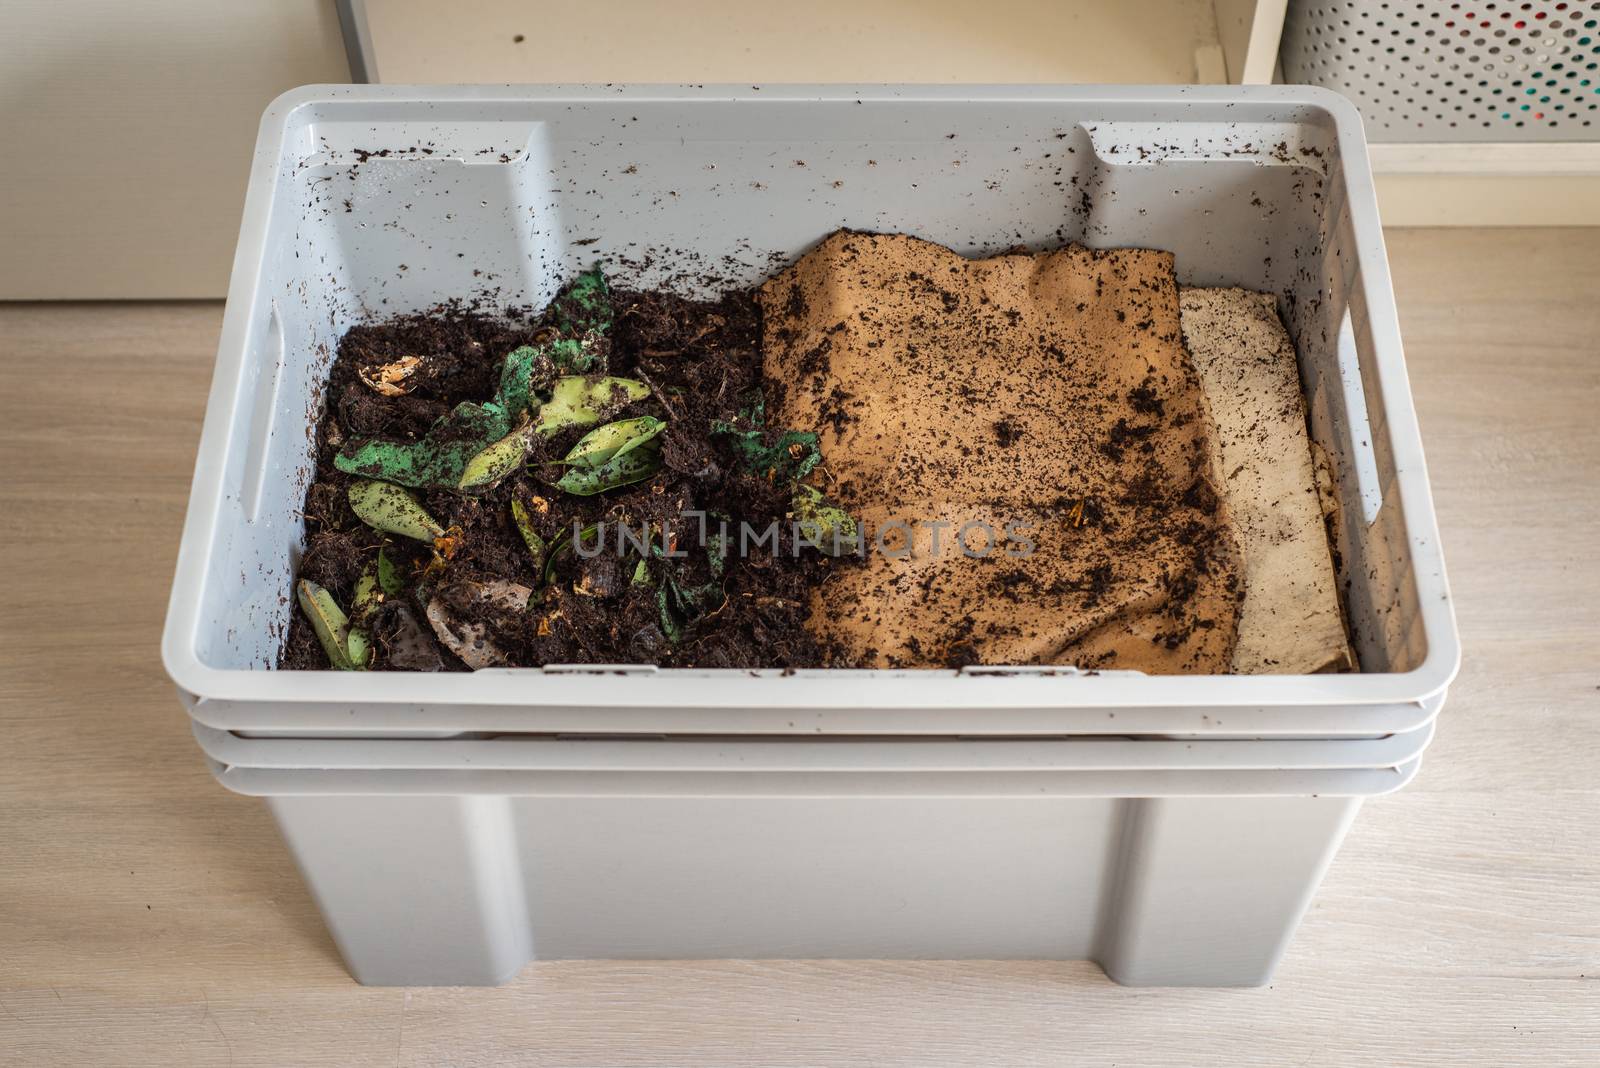 A DIY worm farm composting bin in an apartment by Pendleton